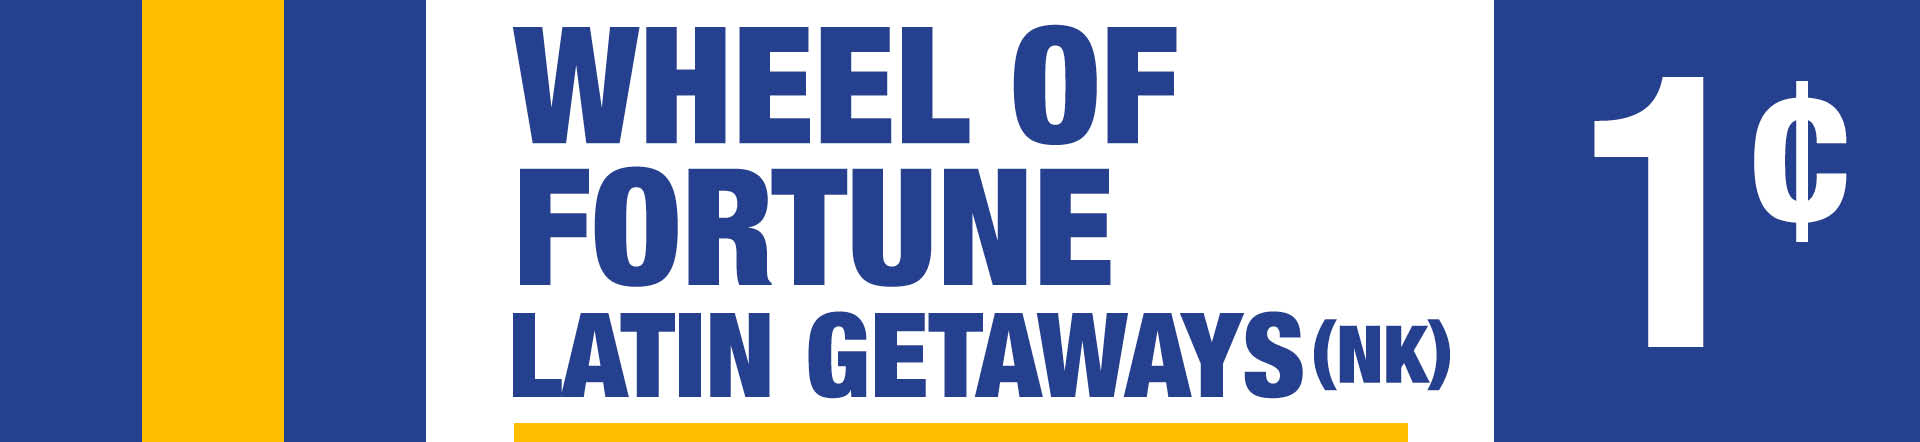 Wheel of Fortune: Latin Getaways (NK)